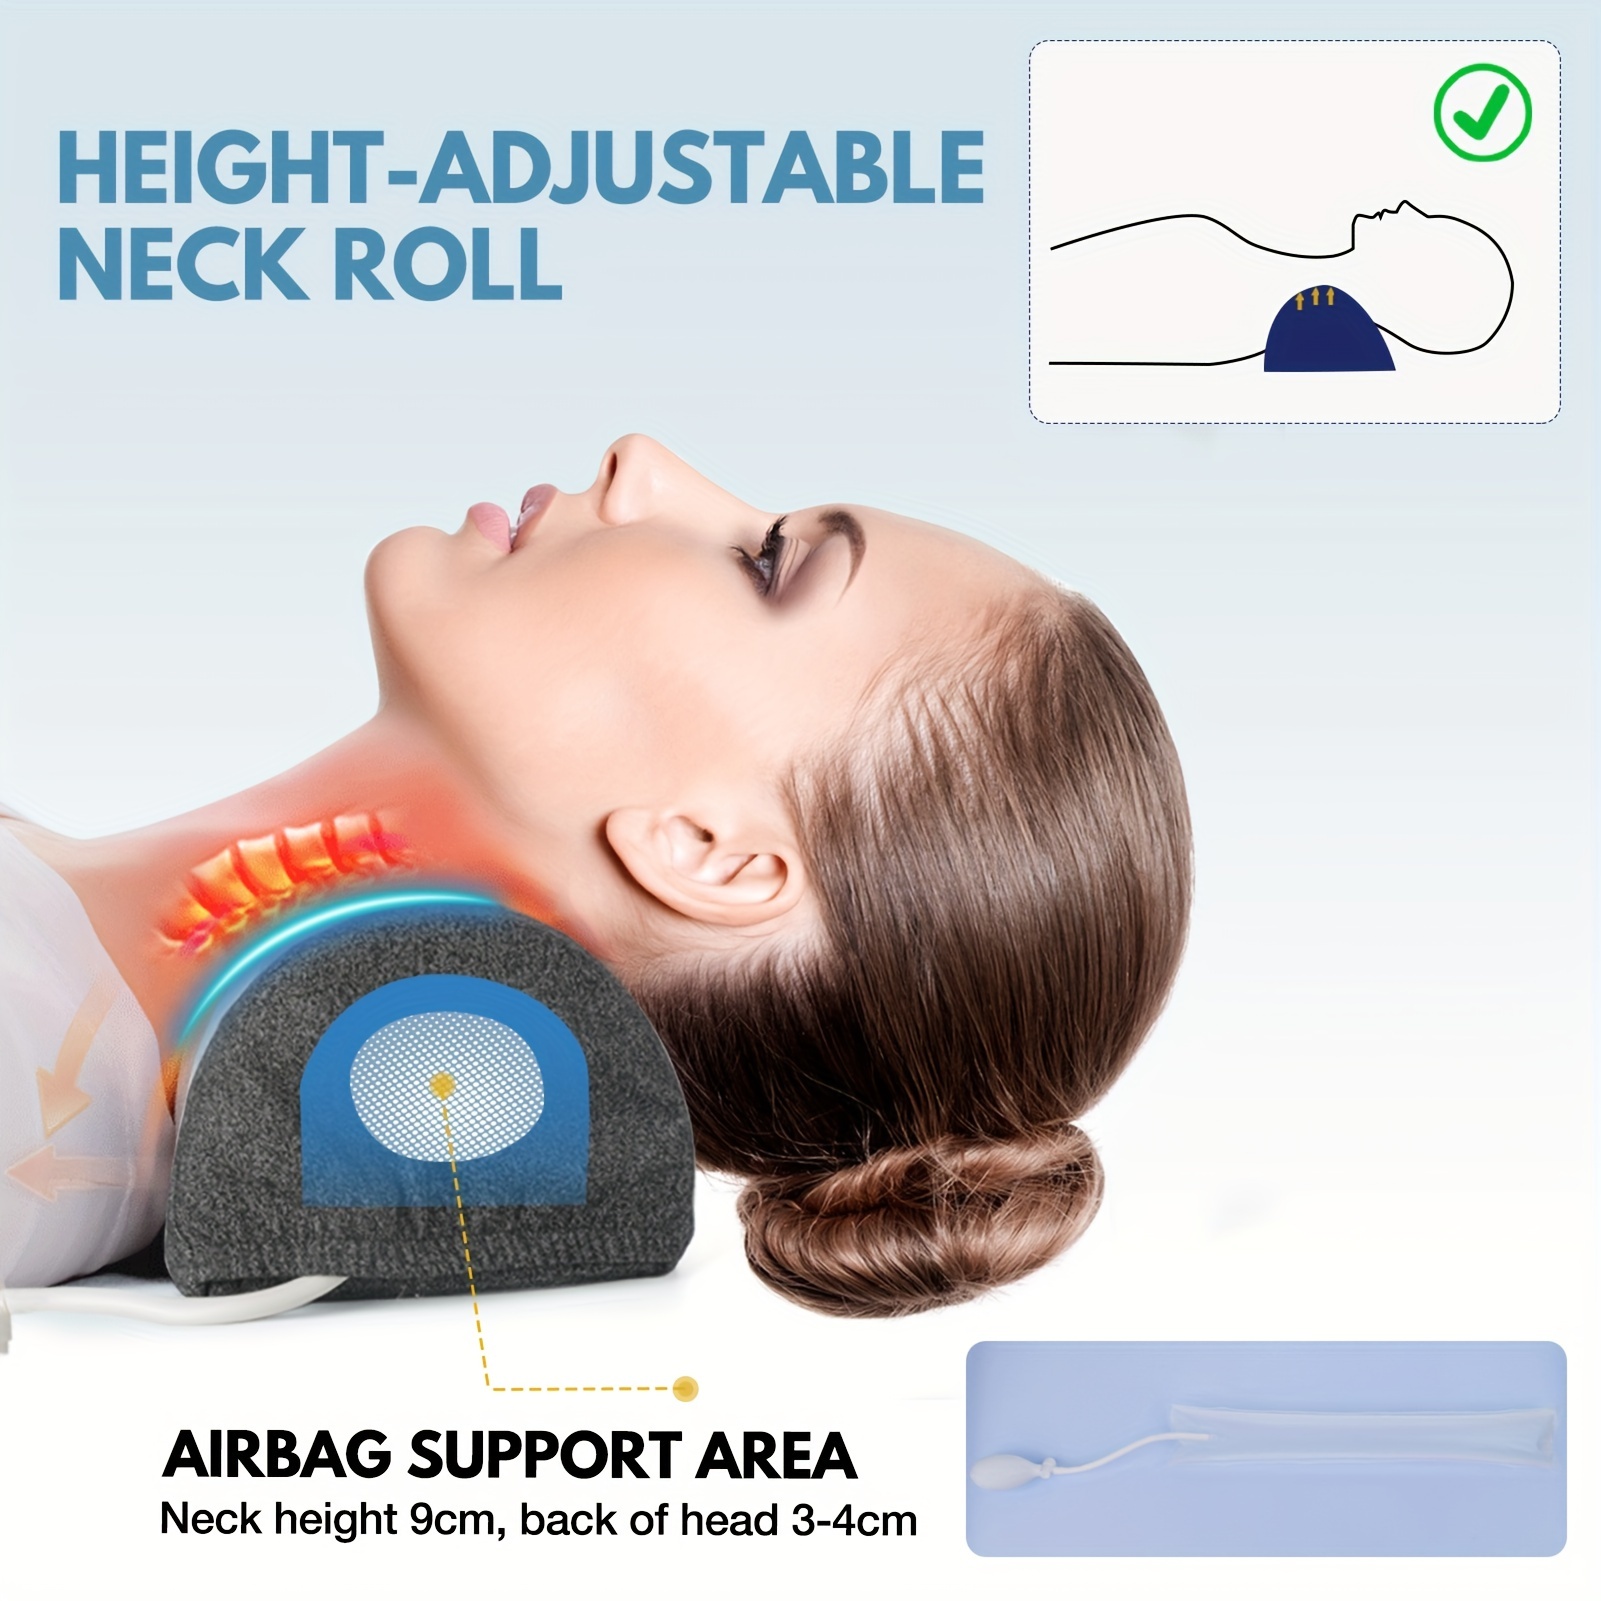 Almohada de espuma viscoelástica, almohada ortopédica transpirable de  altura ajustable, almohada cervical para dolor de cuello, lavable a  máquina